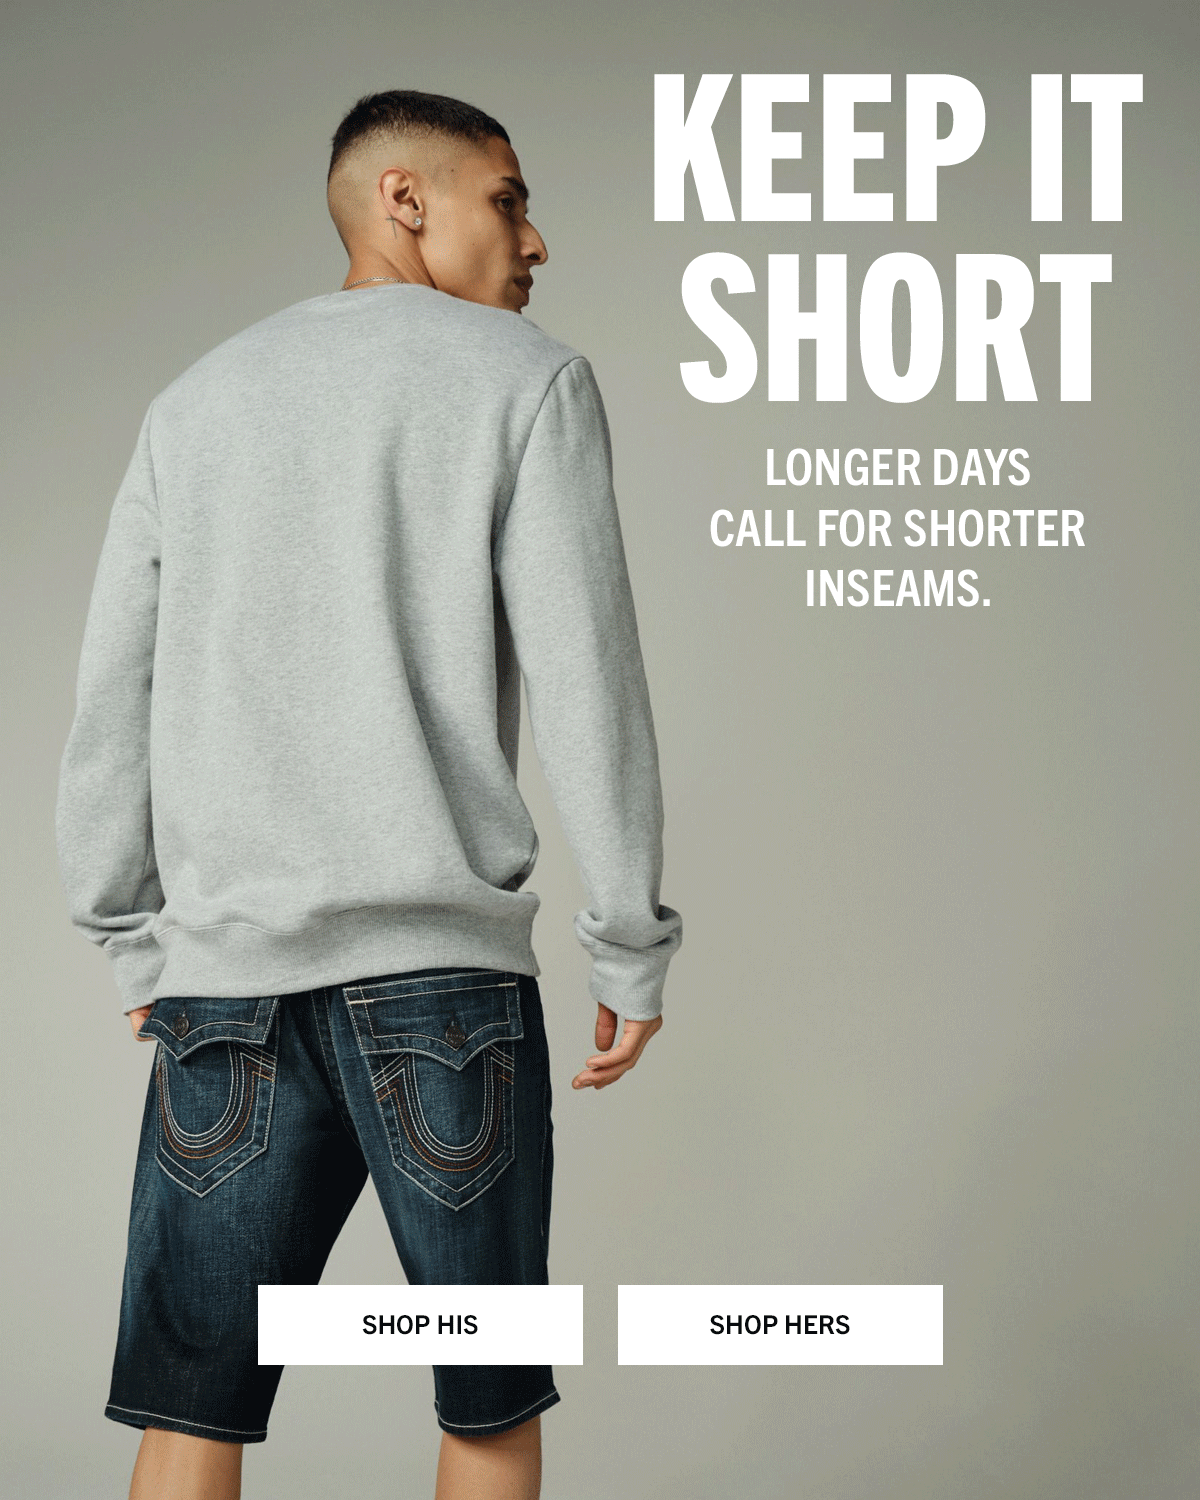 Keep it short. Longer days call for shorter inseams.